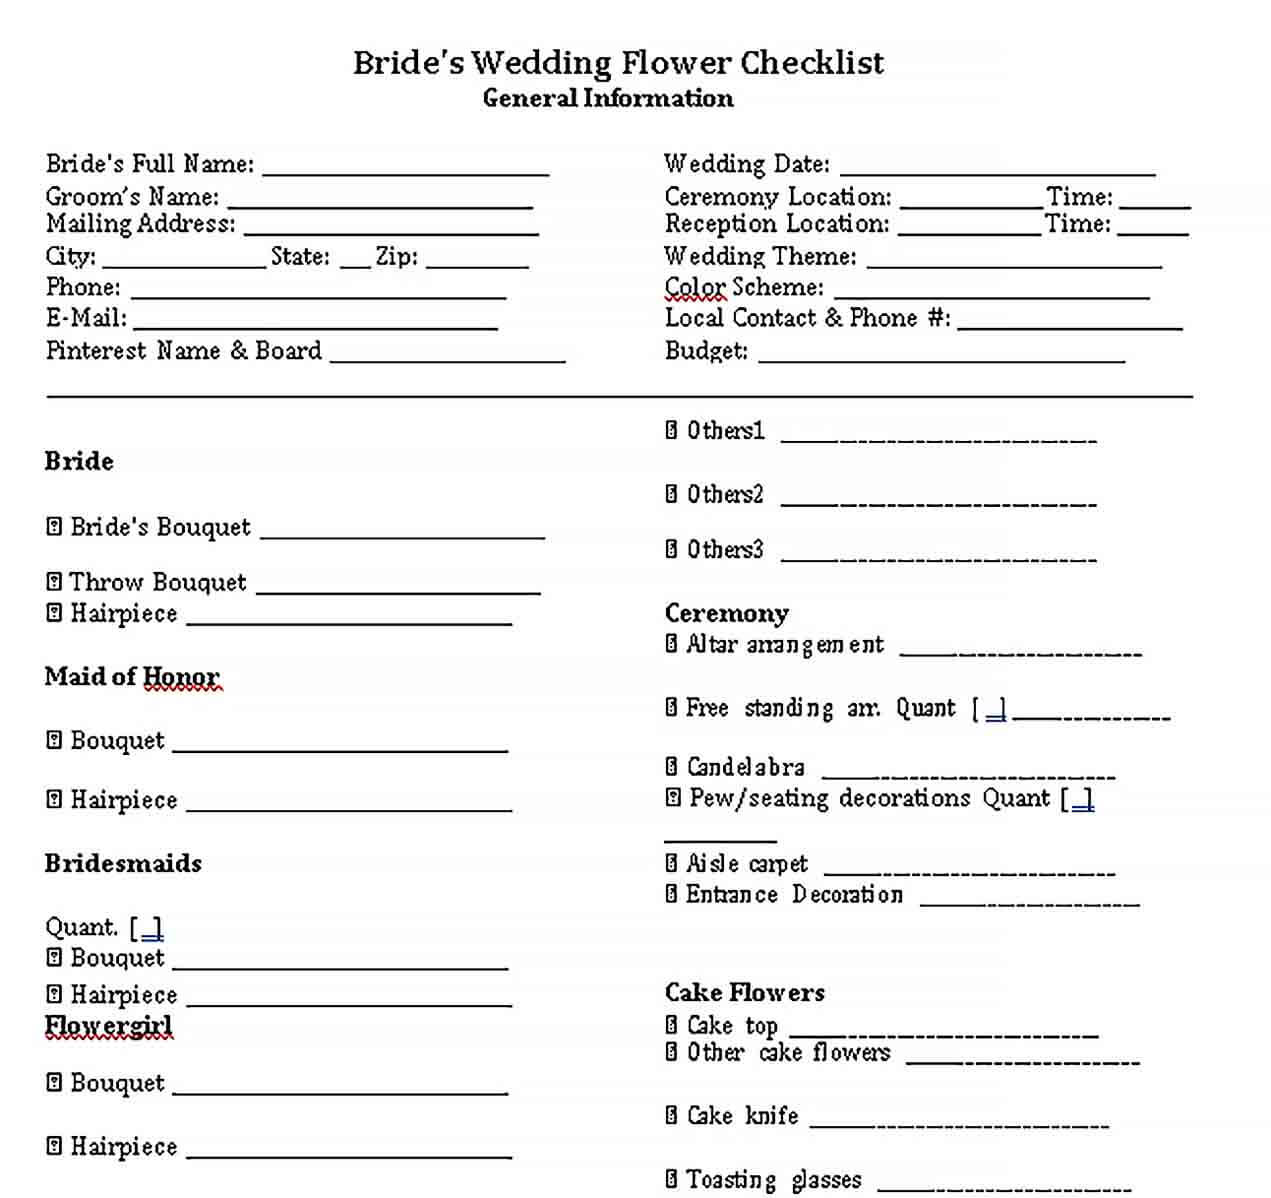 Sample Wedding Flowers Checklist